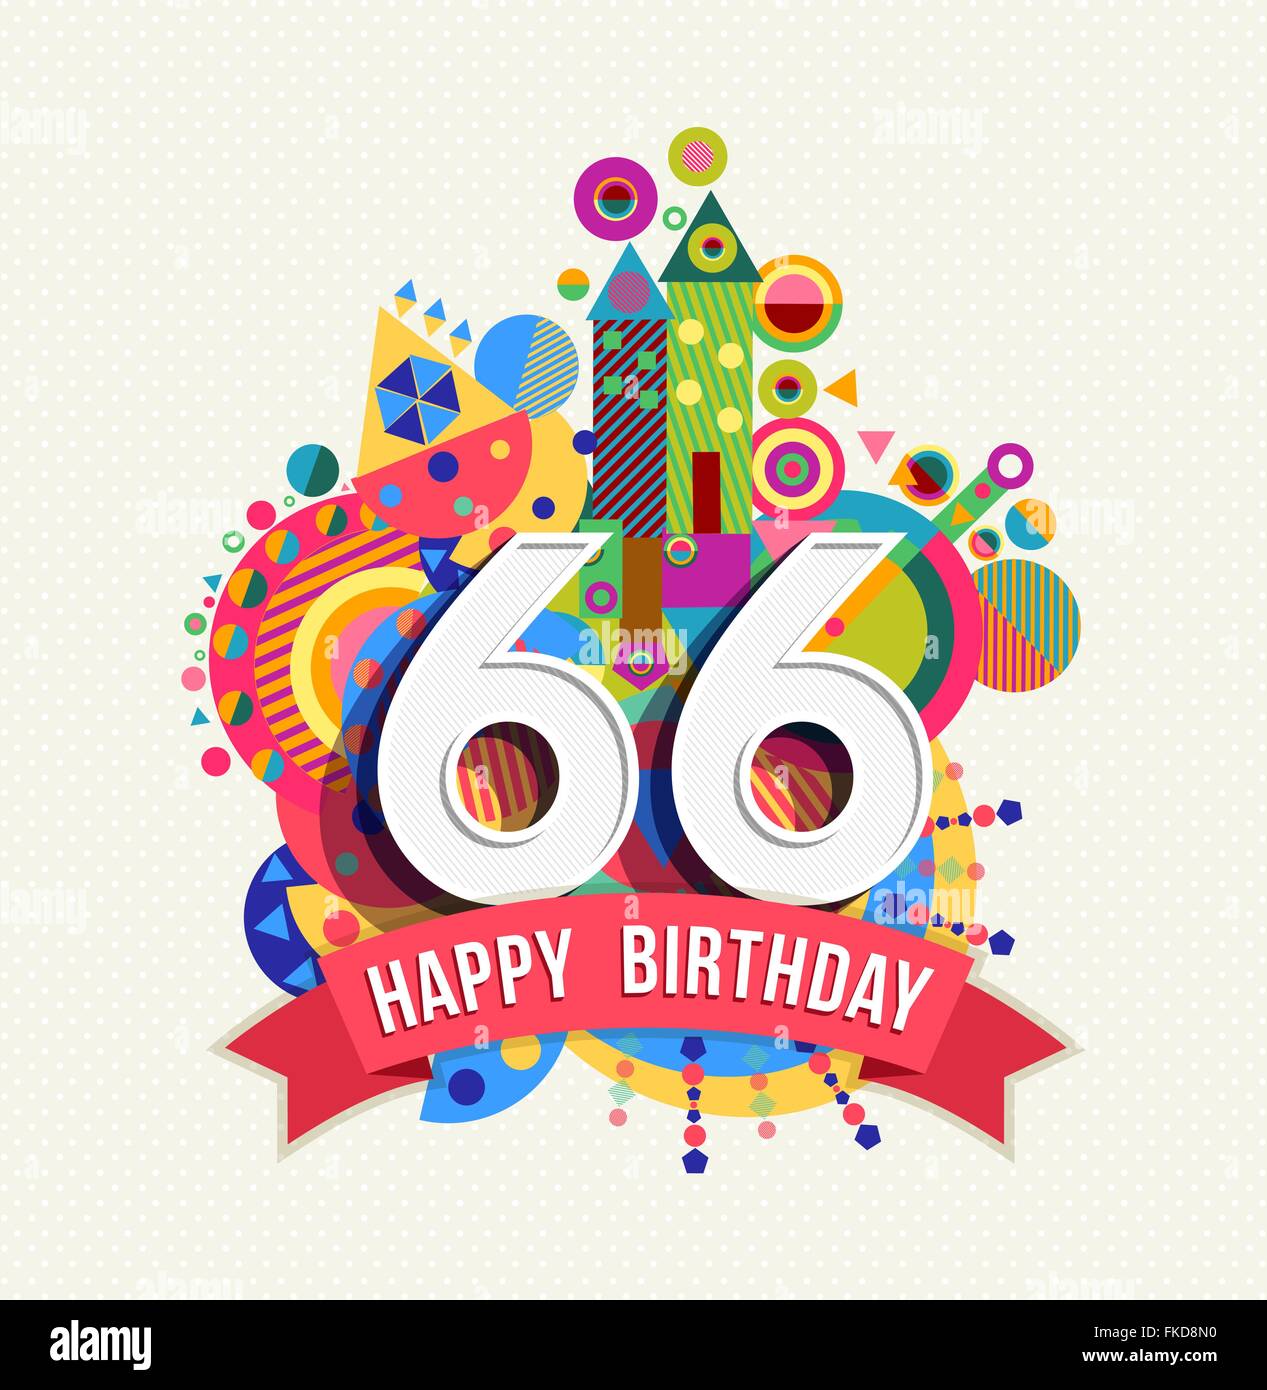 Happy Birthday Sixty Six 66 Year Fun Celebration Anniversary Greeting